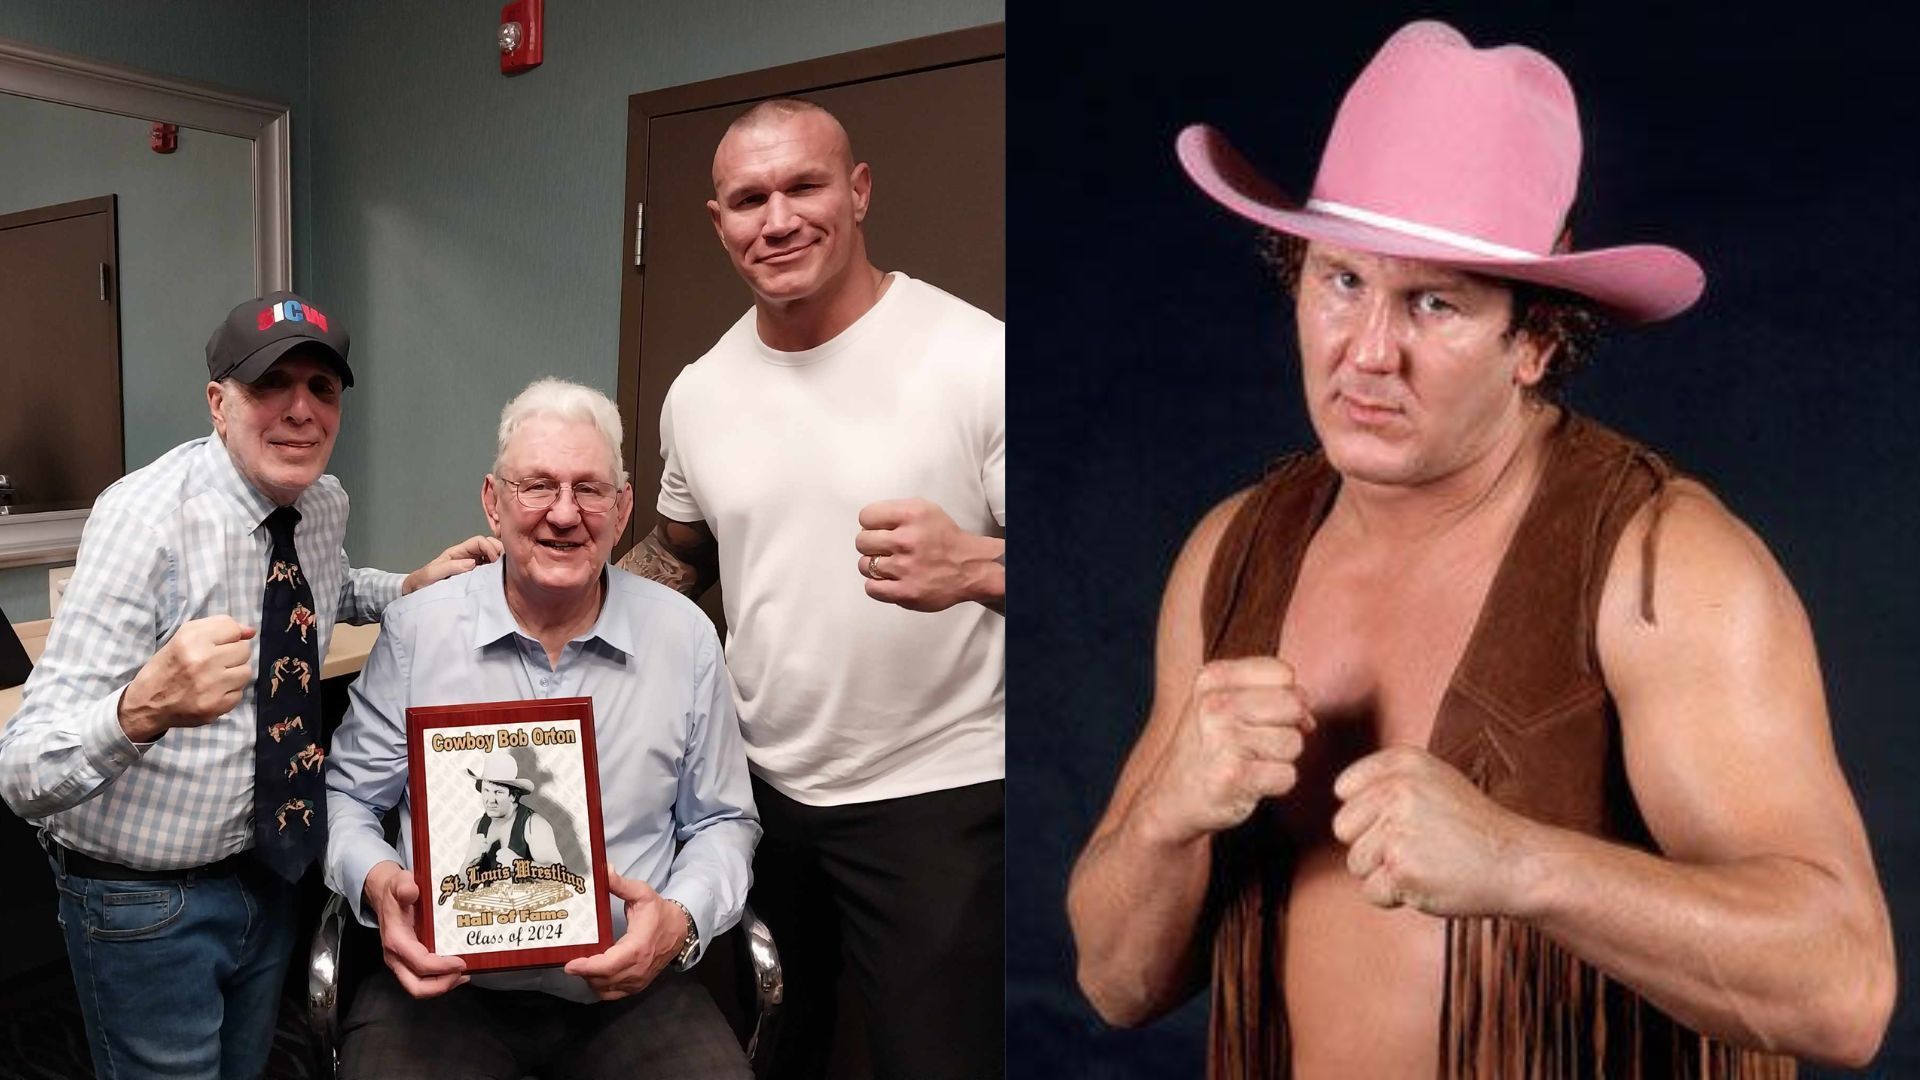 Cowboy Bob Orton Jr. is the father of WWE star Randy Orton